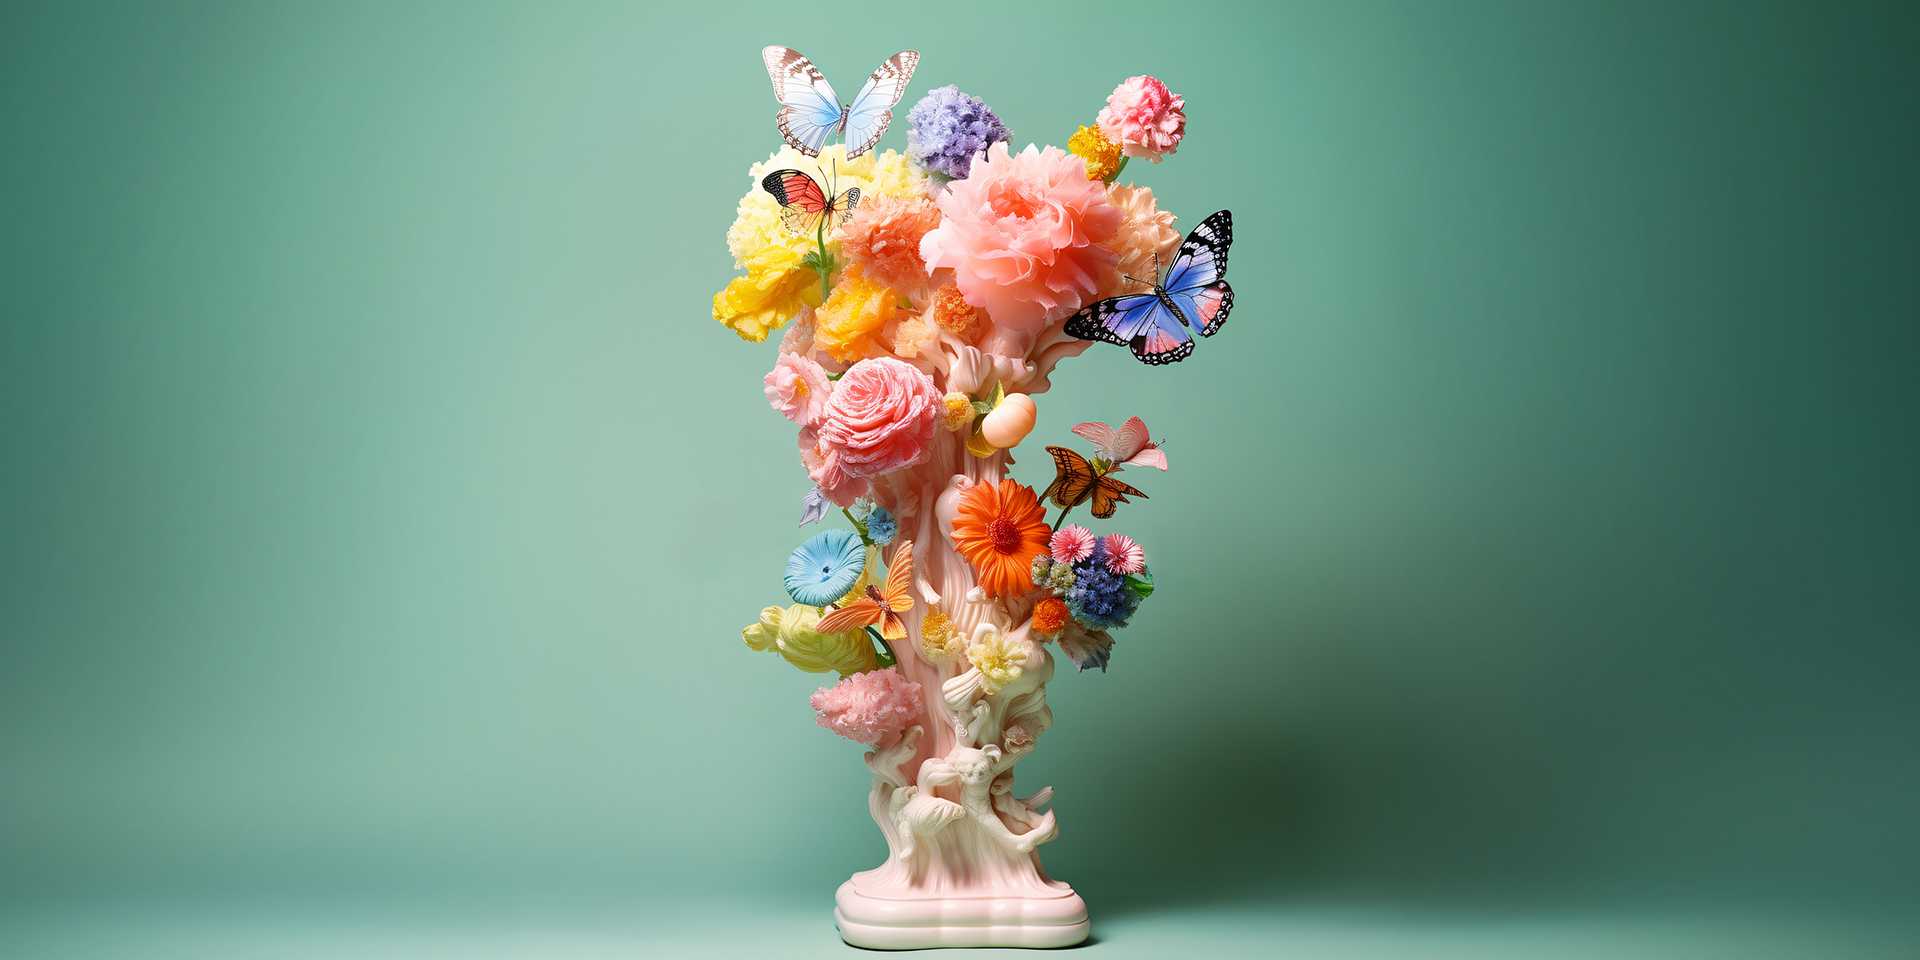 Pastel bouquet of flowers on a pedestal